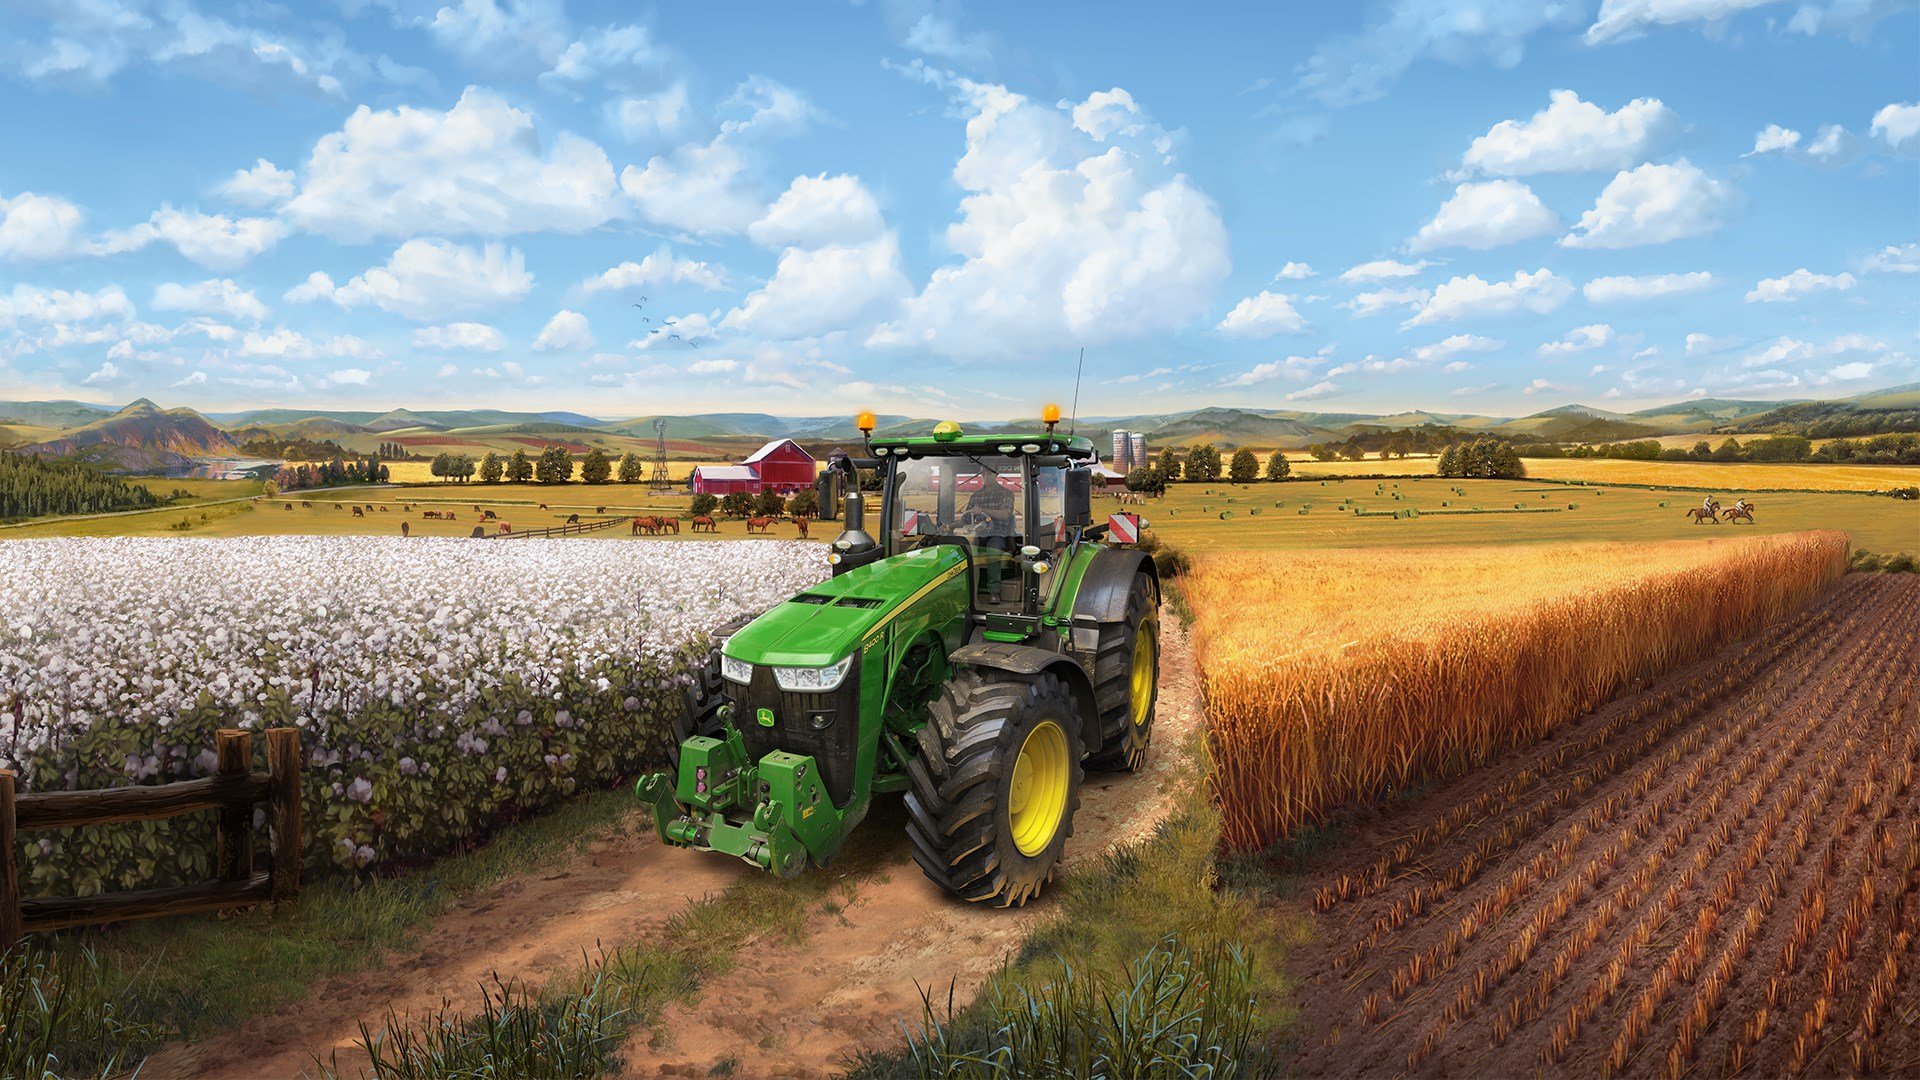 Farming Simulator 19 cover image